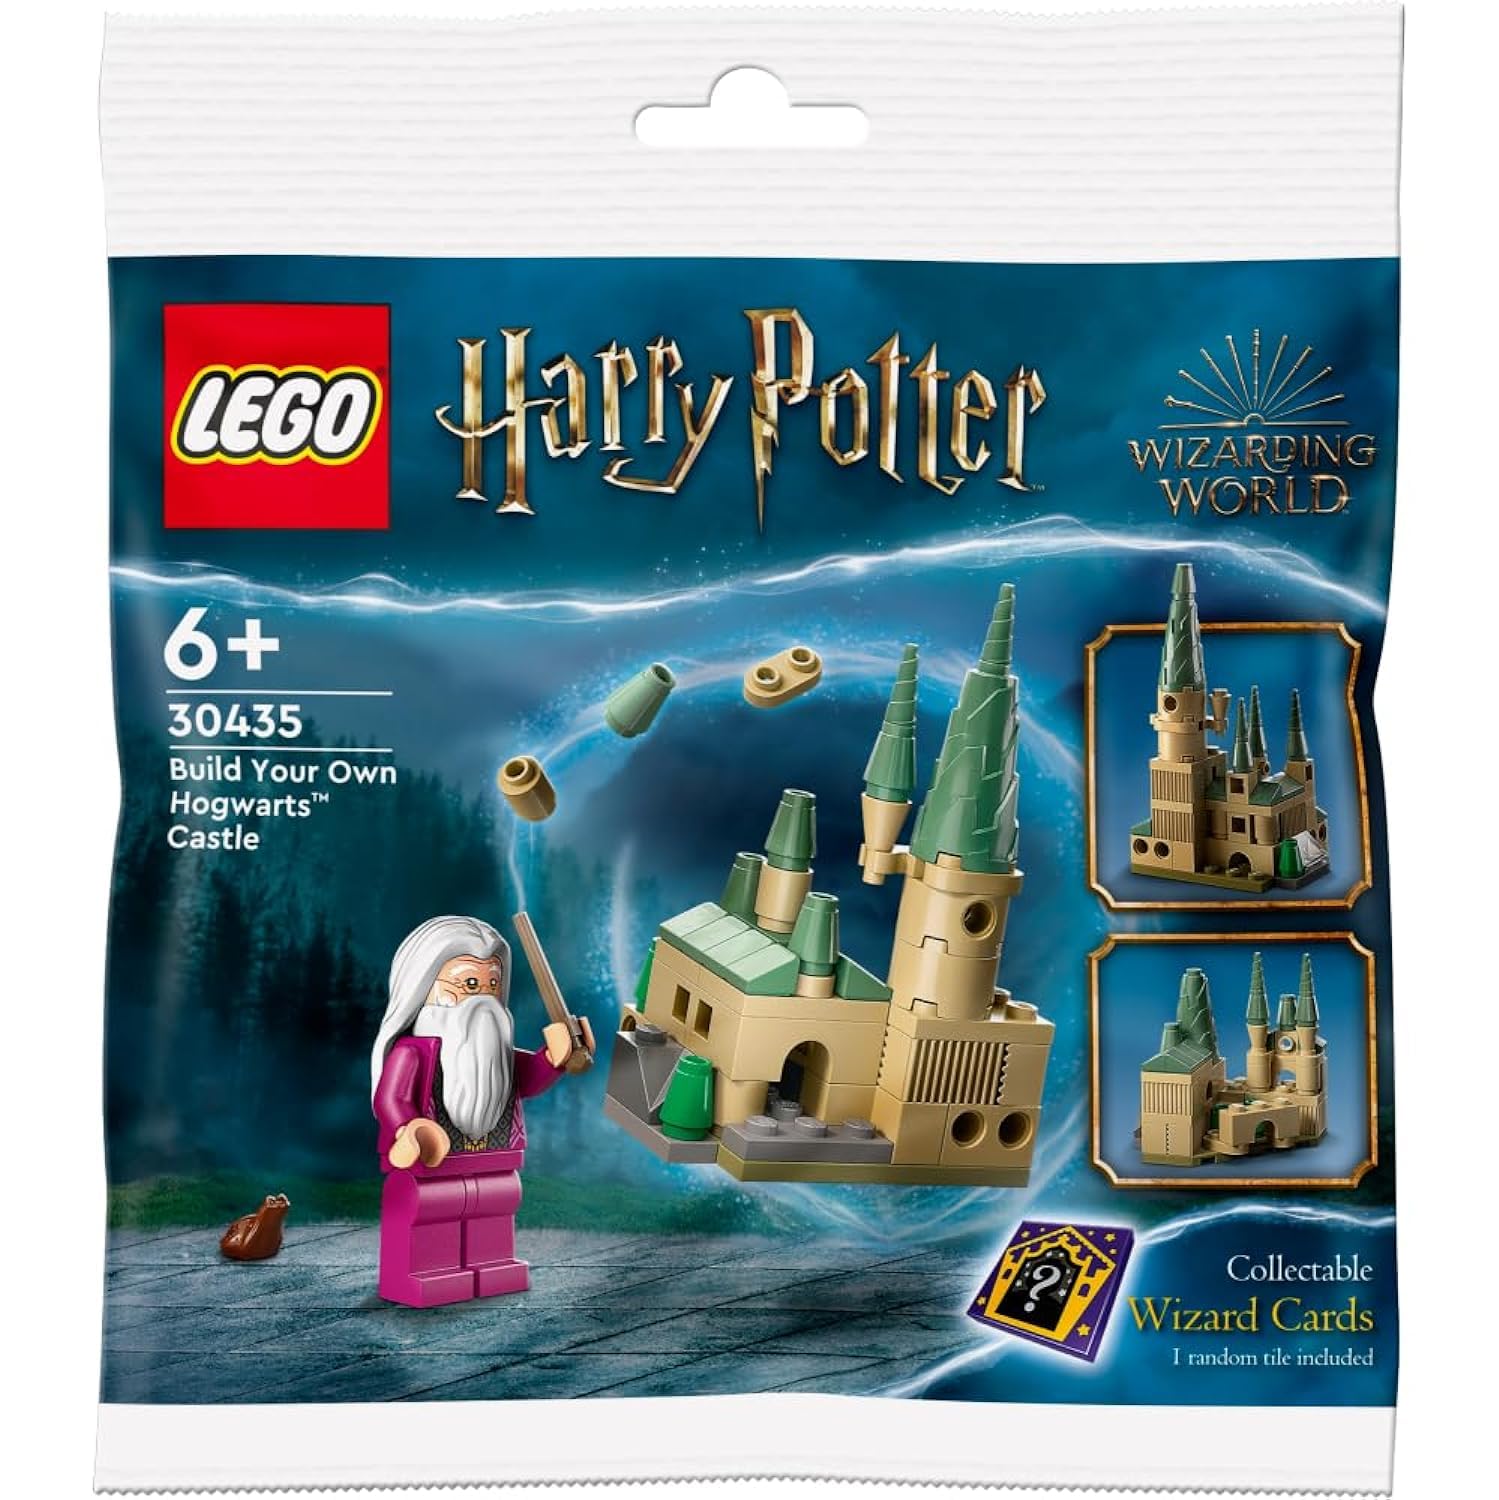 grand escompte LEGO Harry Potter Zbuduj wÄšasny zamek Hogwart (30435) [KLOCKI] npYPRNd32 tout pour vous